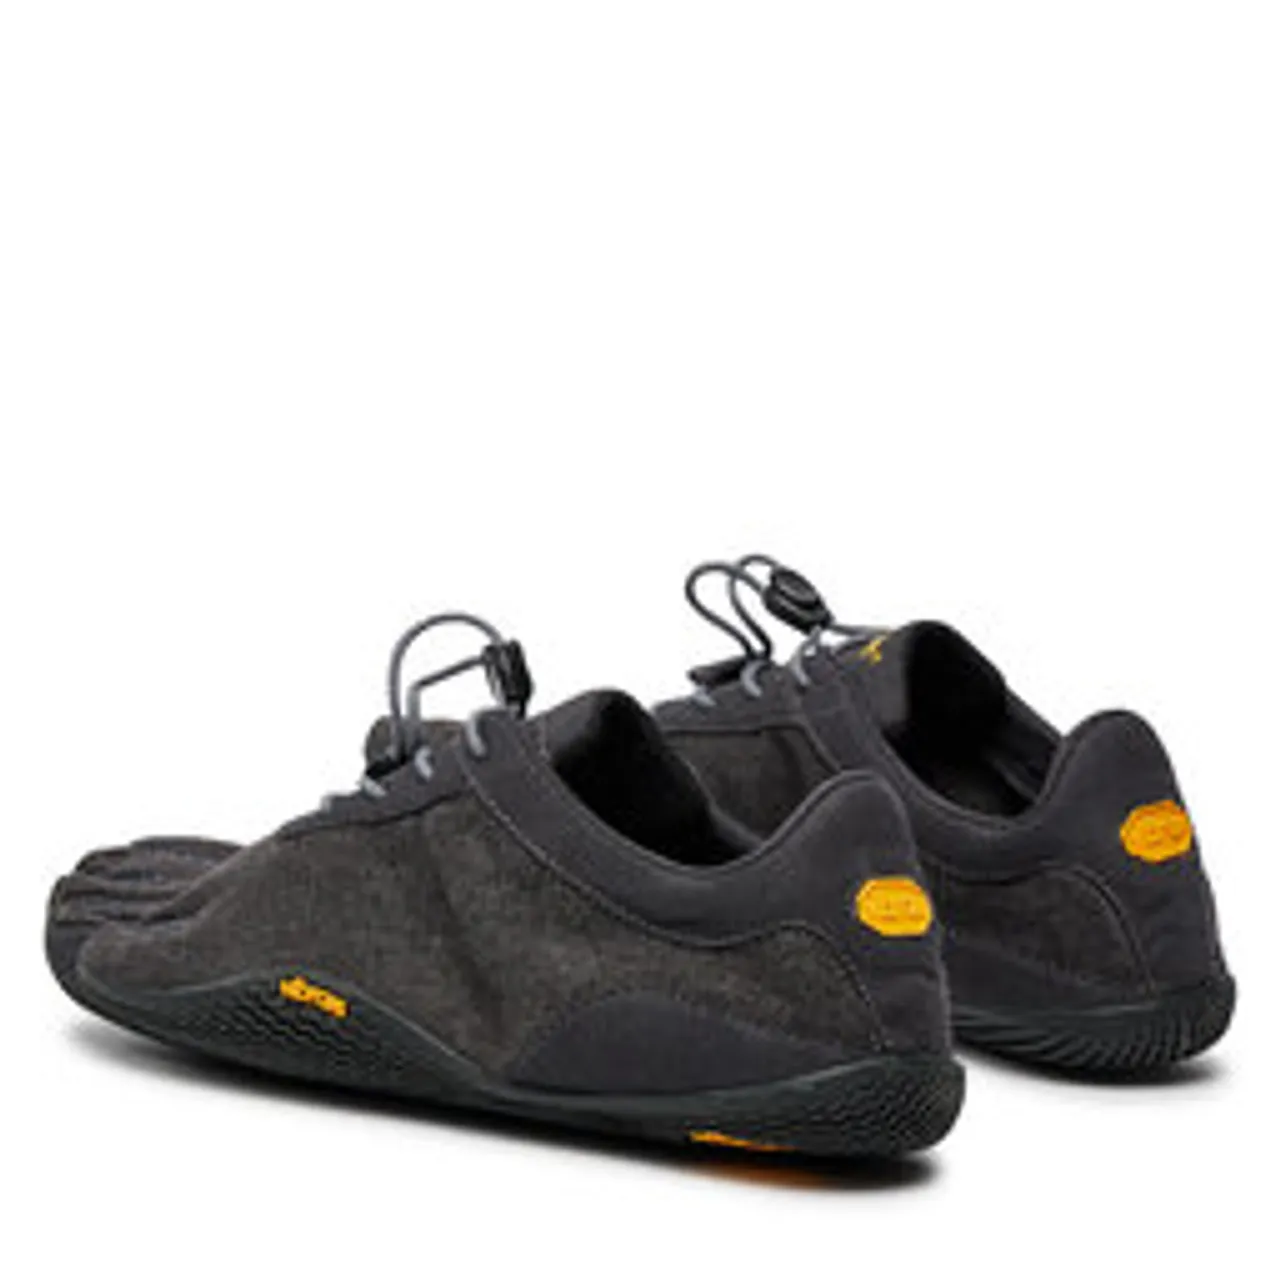 Schuhe Vibram Fivefingers Kso Eco 21W9501 Grey